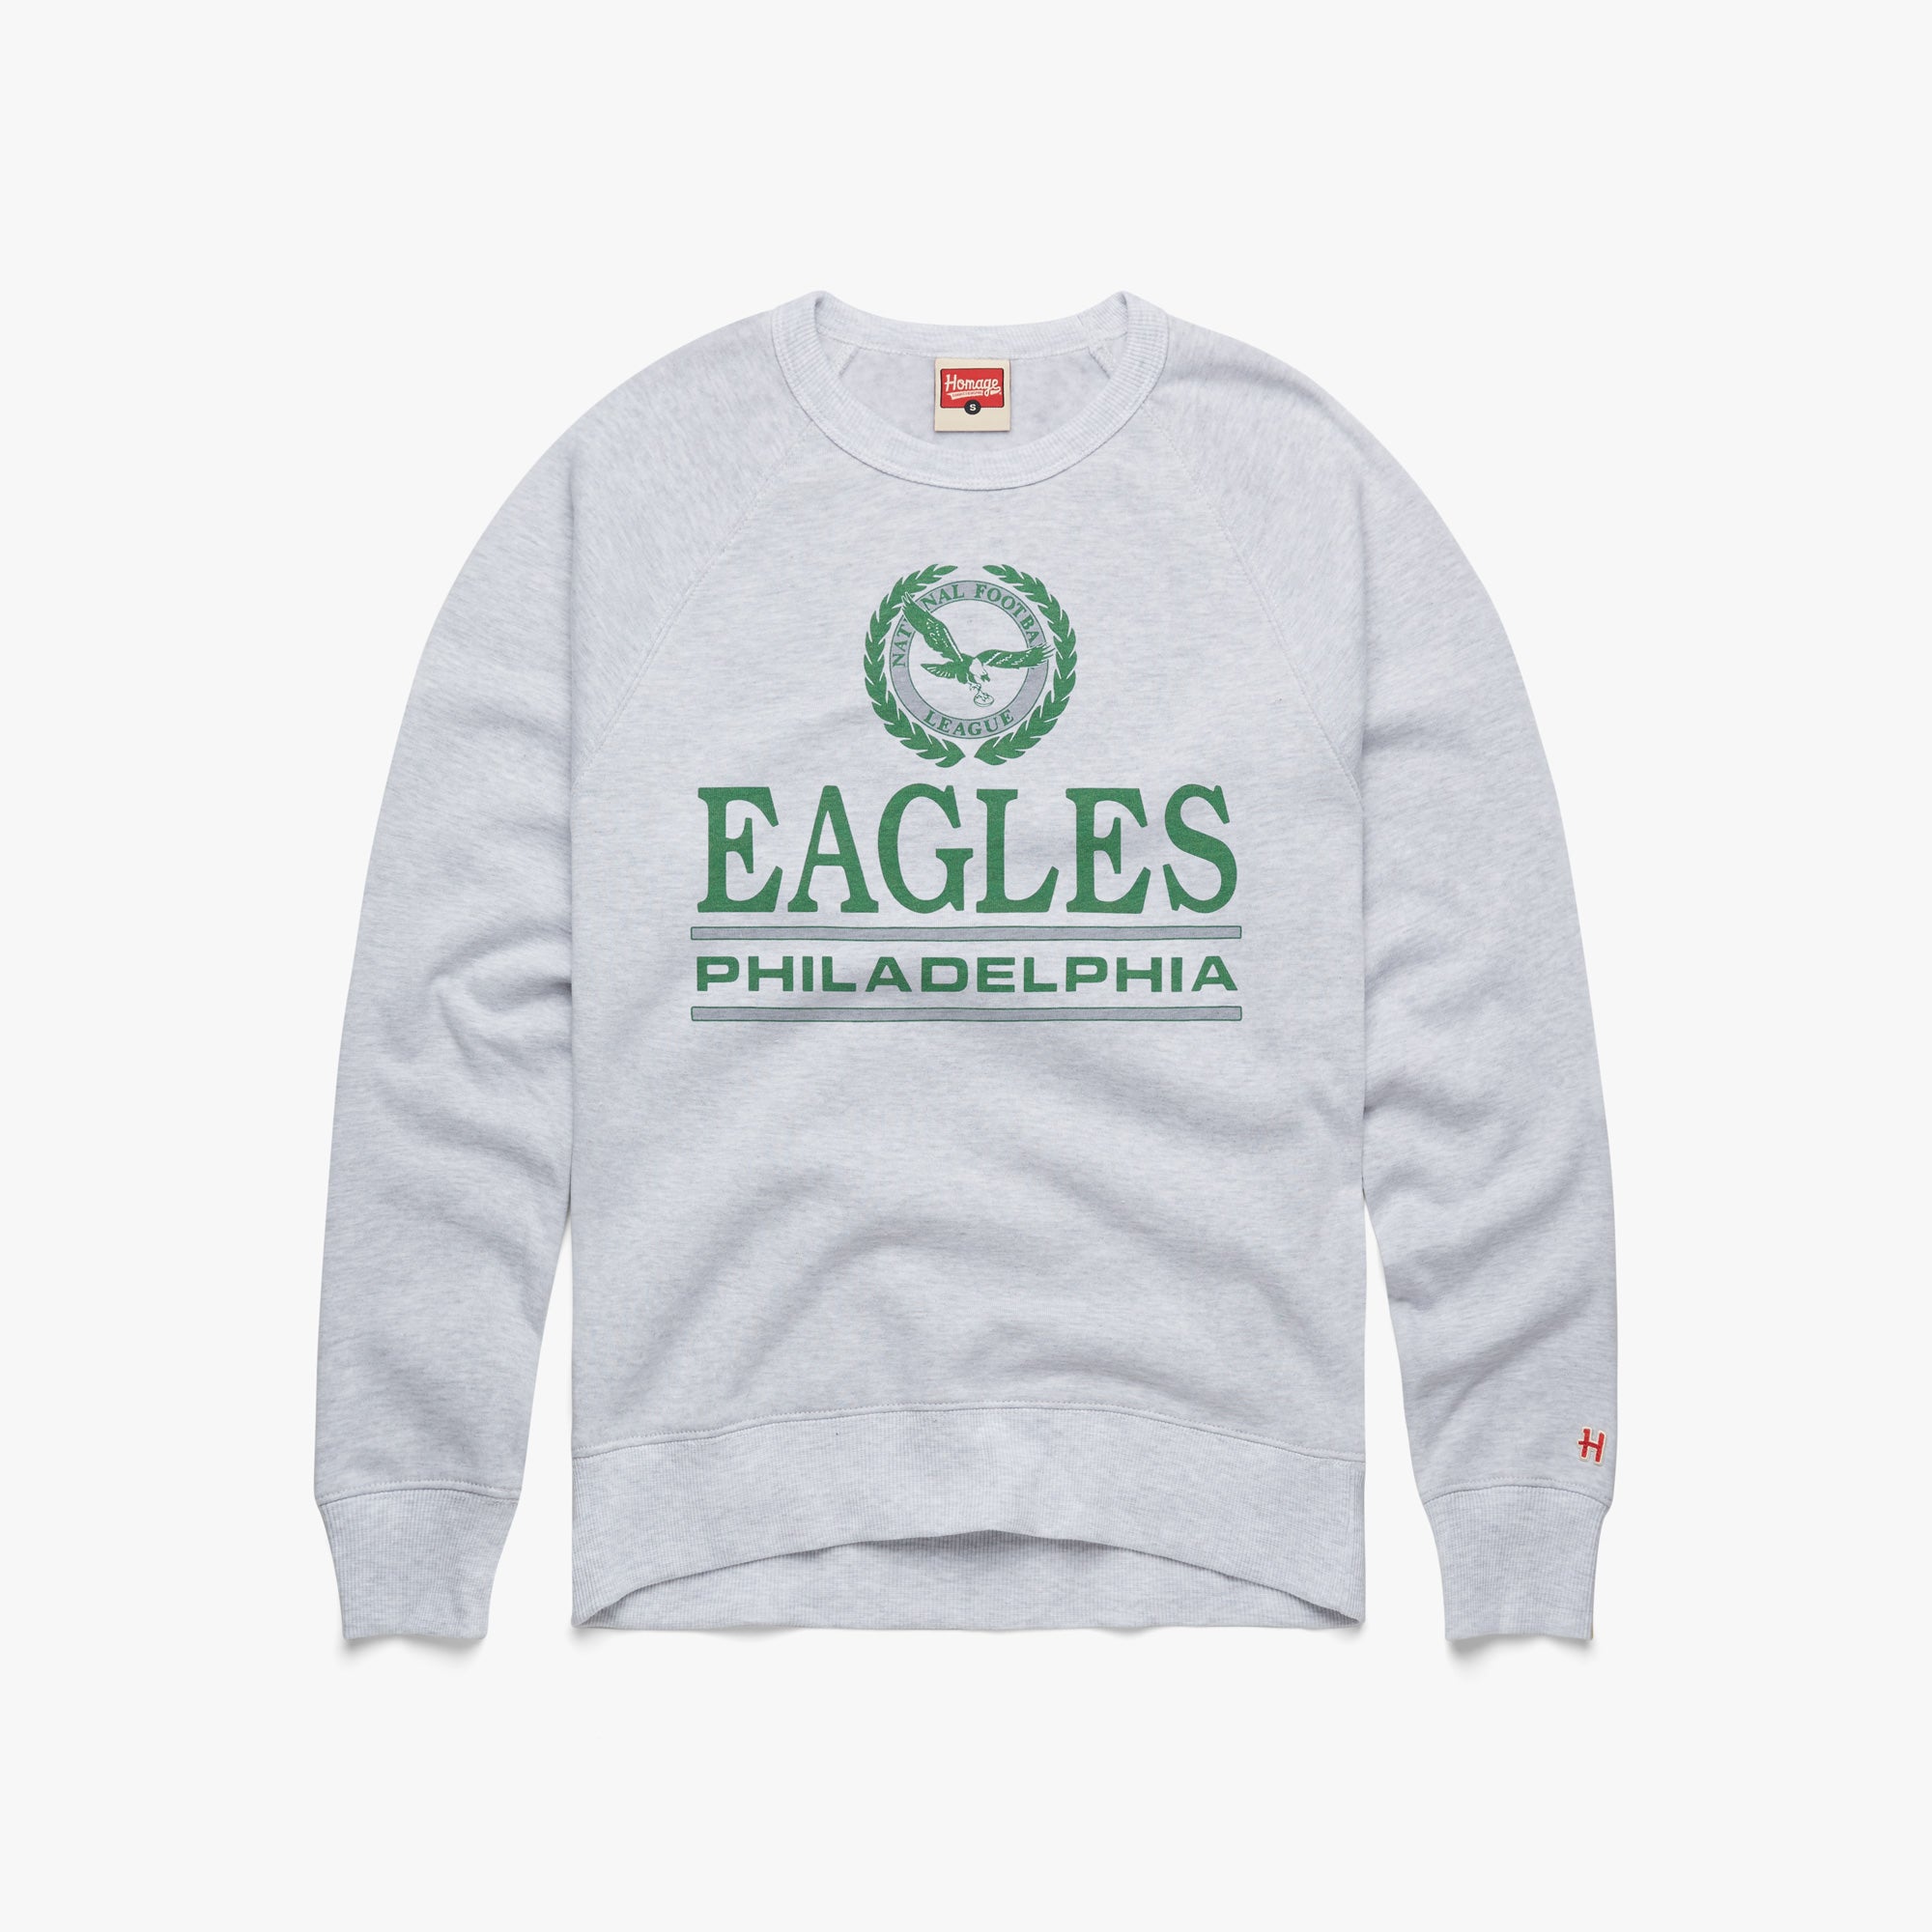 Philadelphia Eagles Retro Throwback - Philadelphia Eagles - Crewneck  Sweatshirt